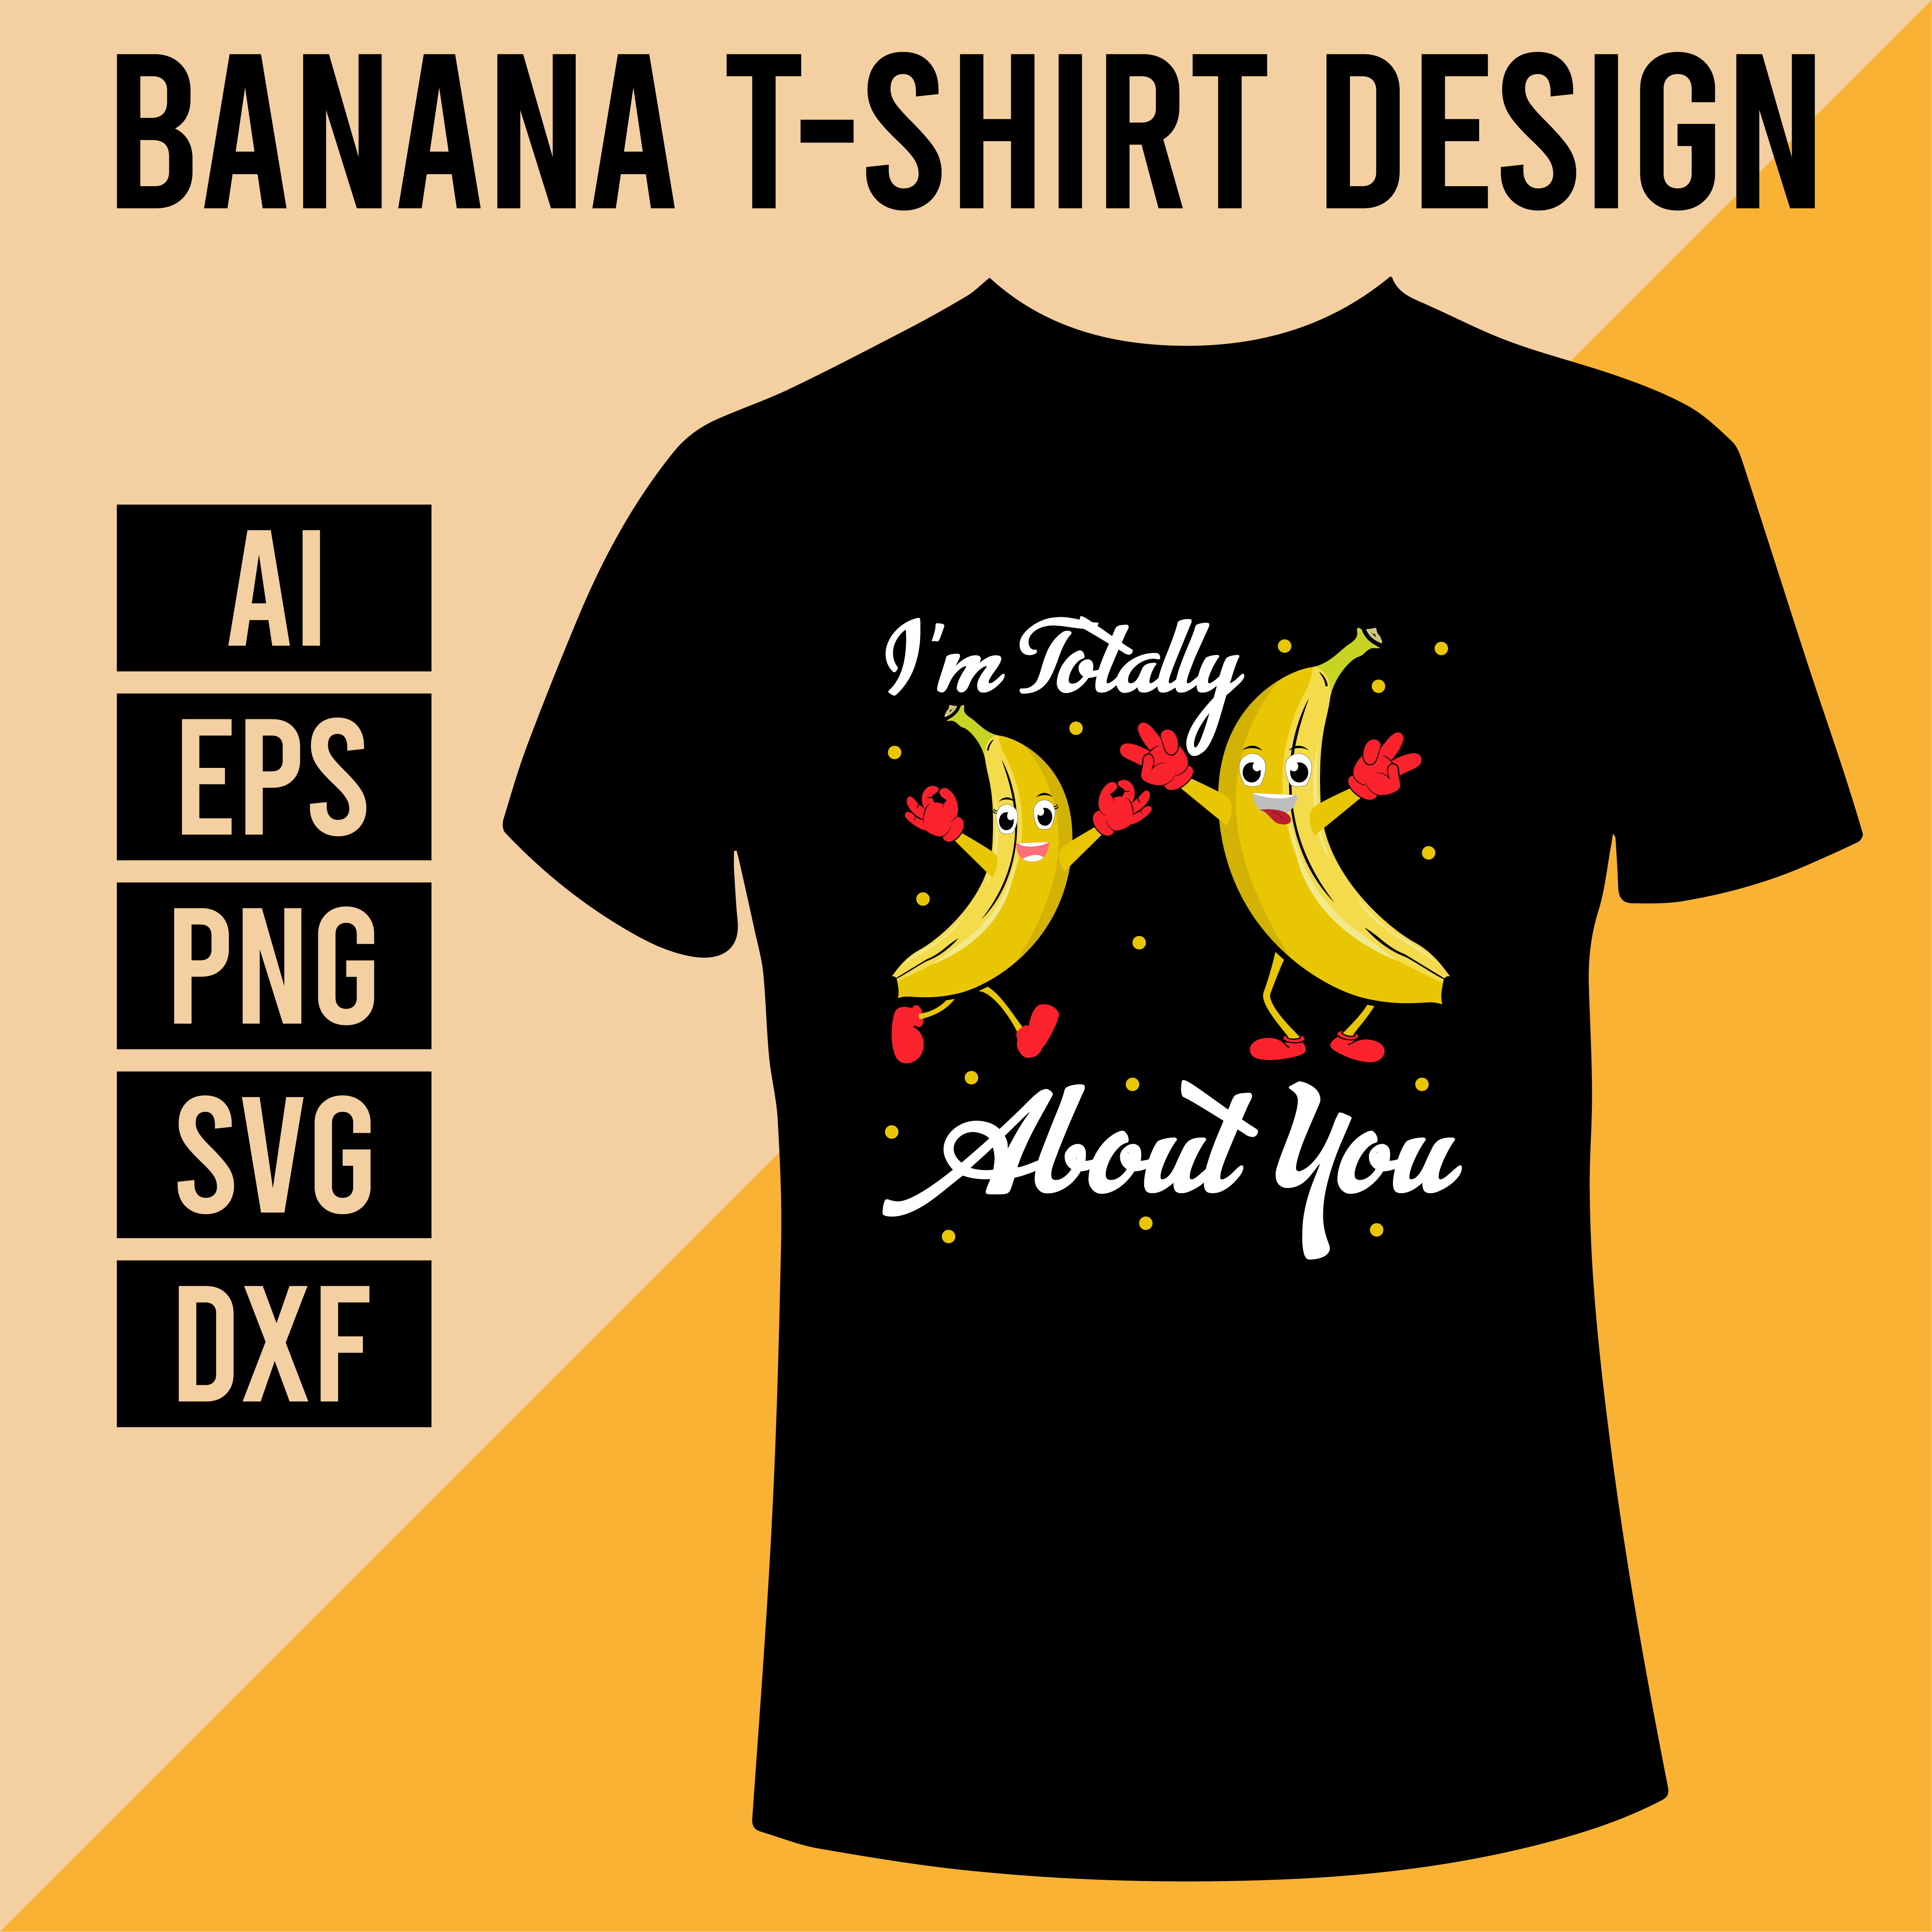 Banana T-Shirt Design cover image.